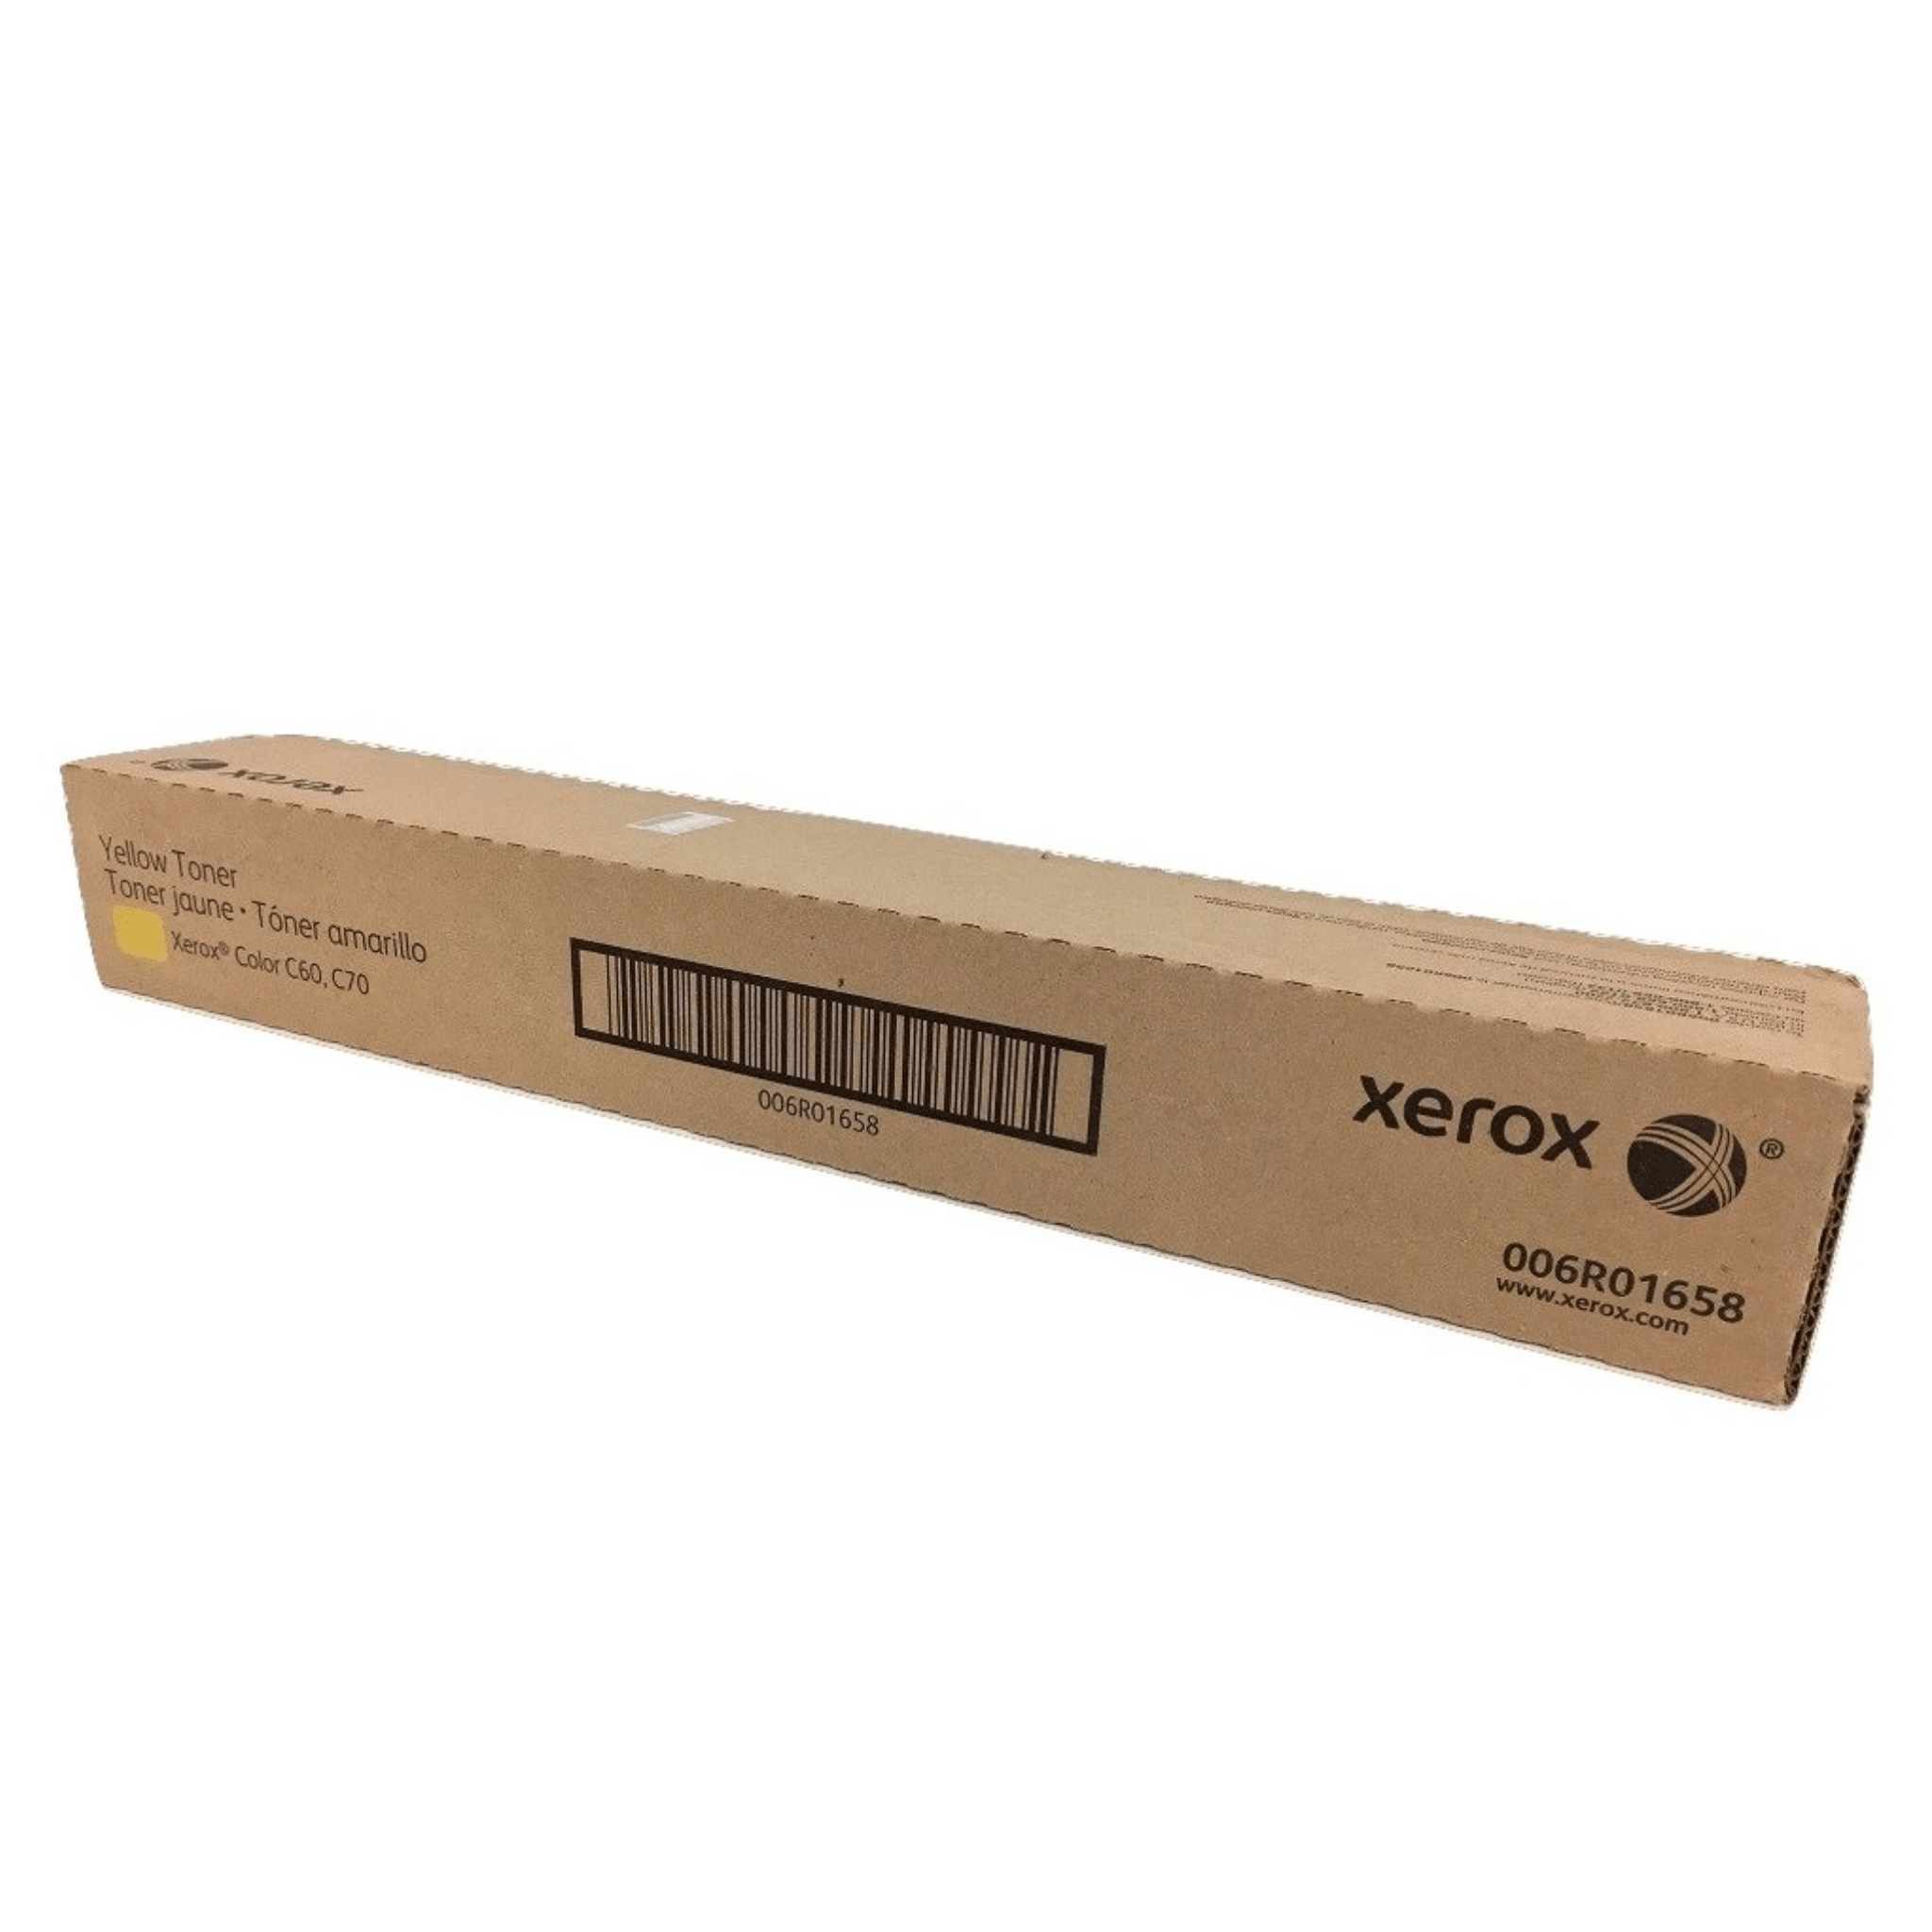 006R01658 - Toner Giallo - Xerox® Colour™ C60/C70